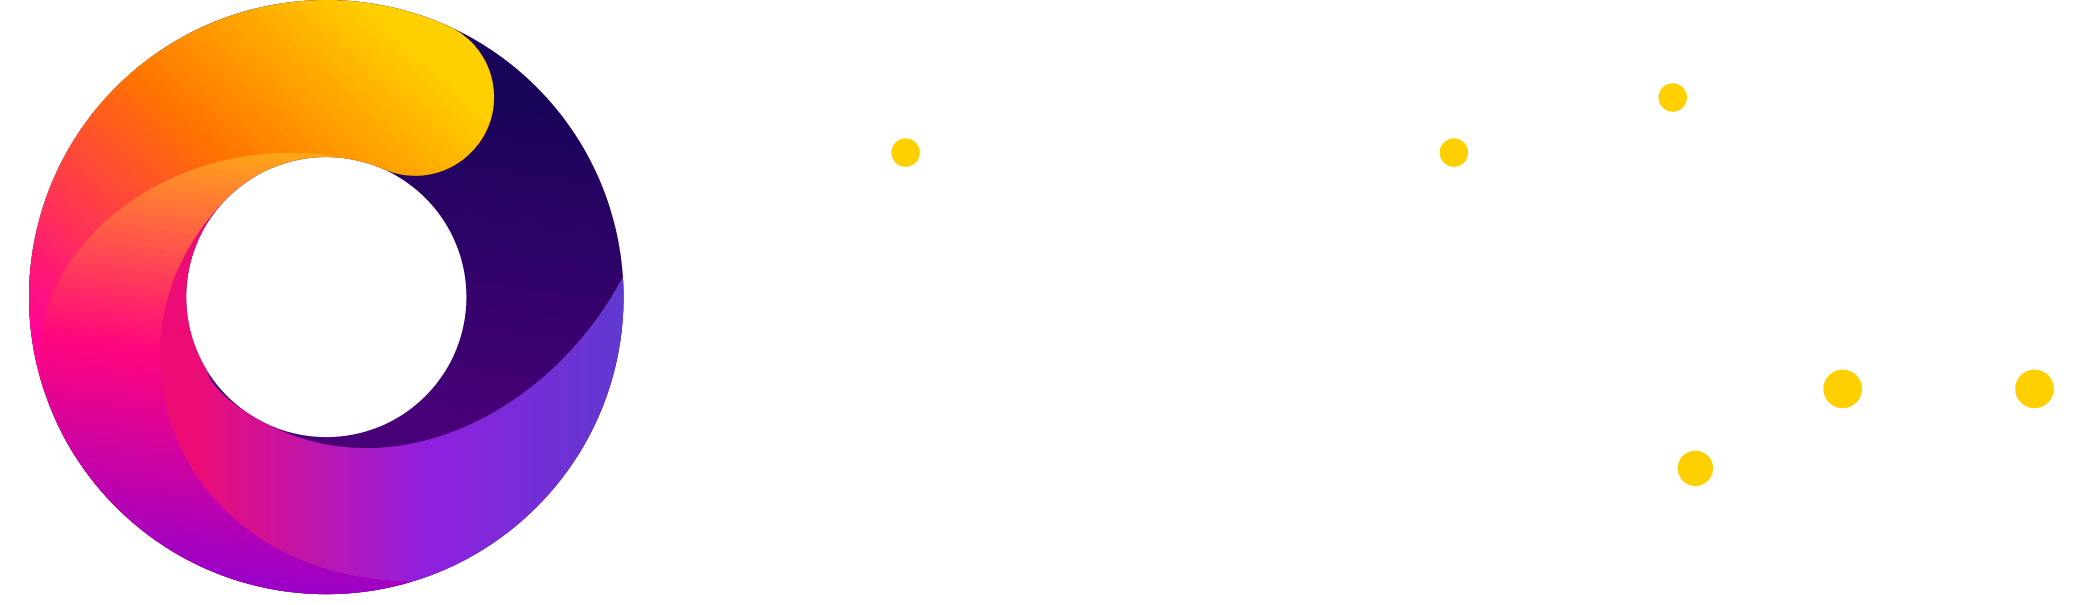 NoDepositBonusCC Logo